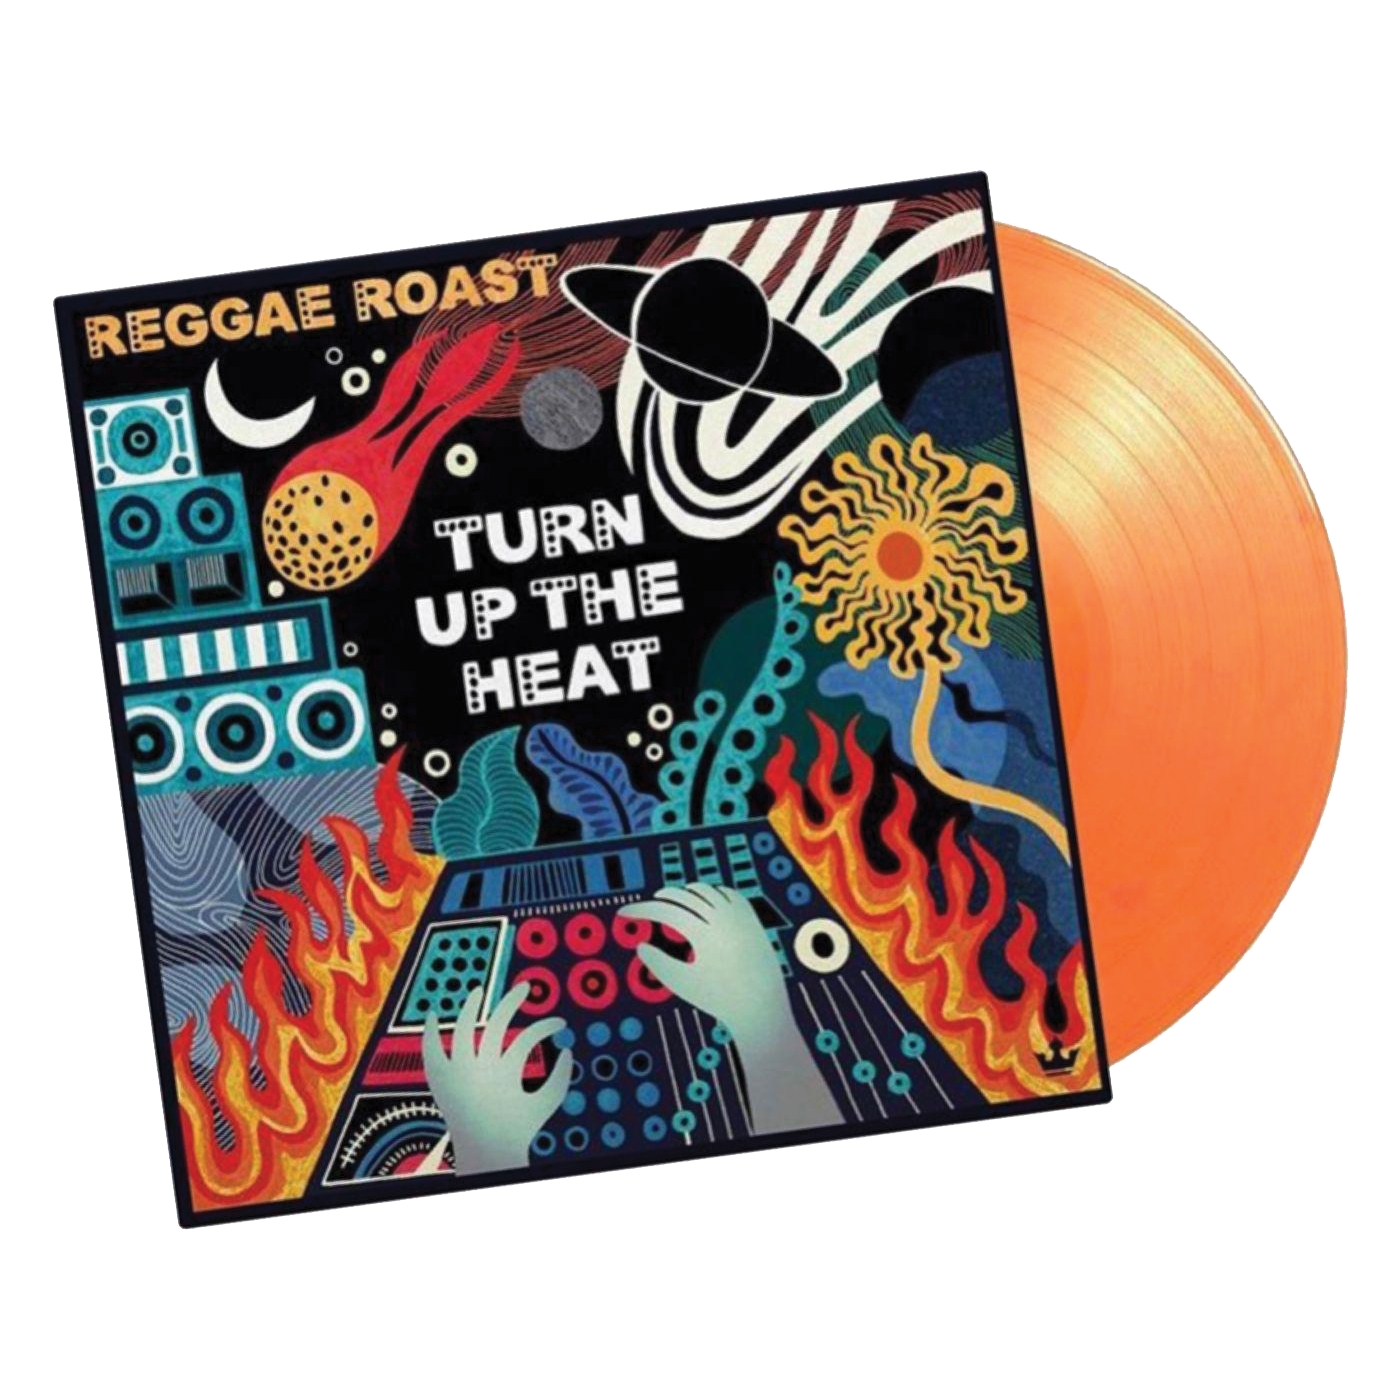 Turn Up The Heat (Double Vinyl LP & Digital Download)